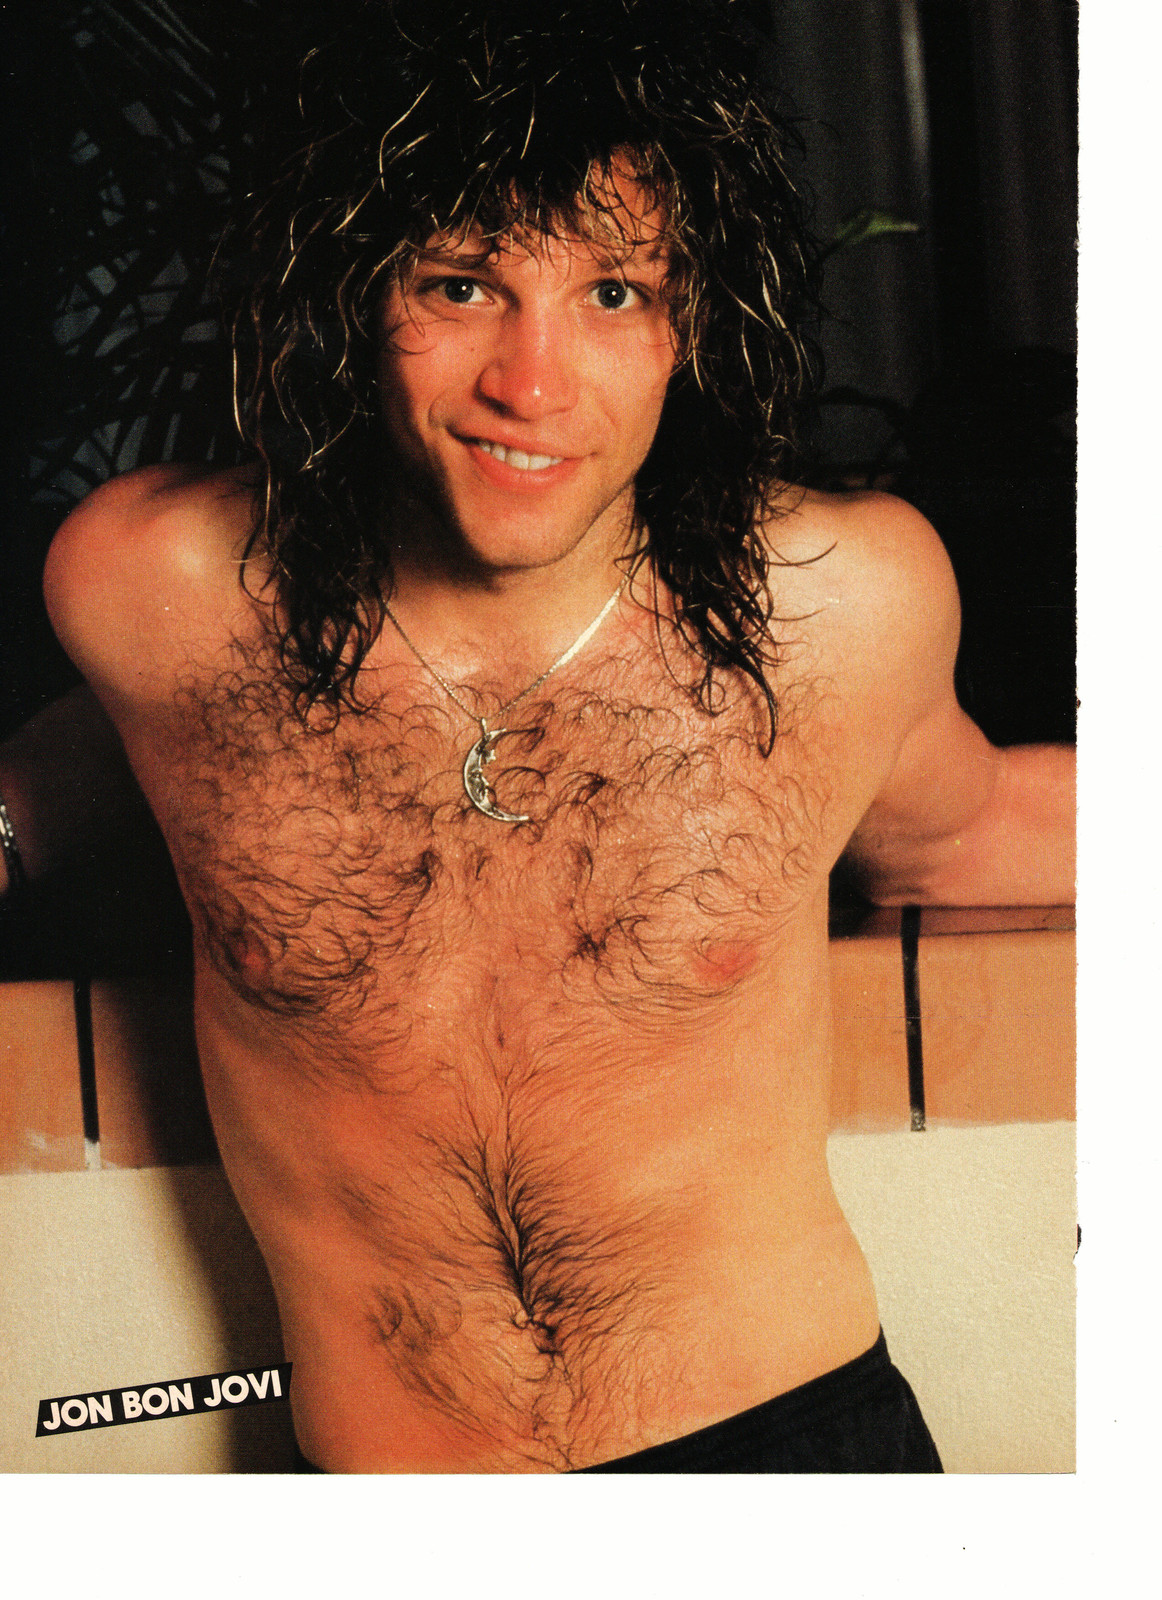 Bon Jovi In Raunchy Topless Photo Flap